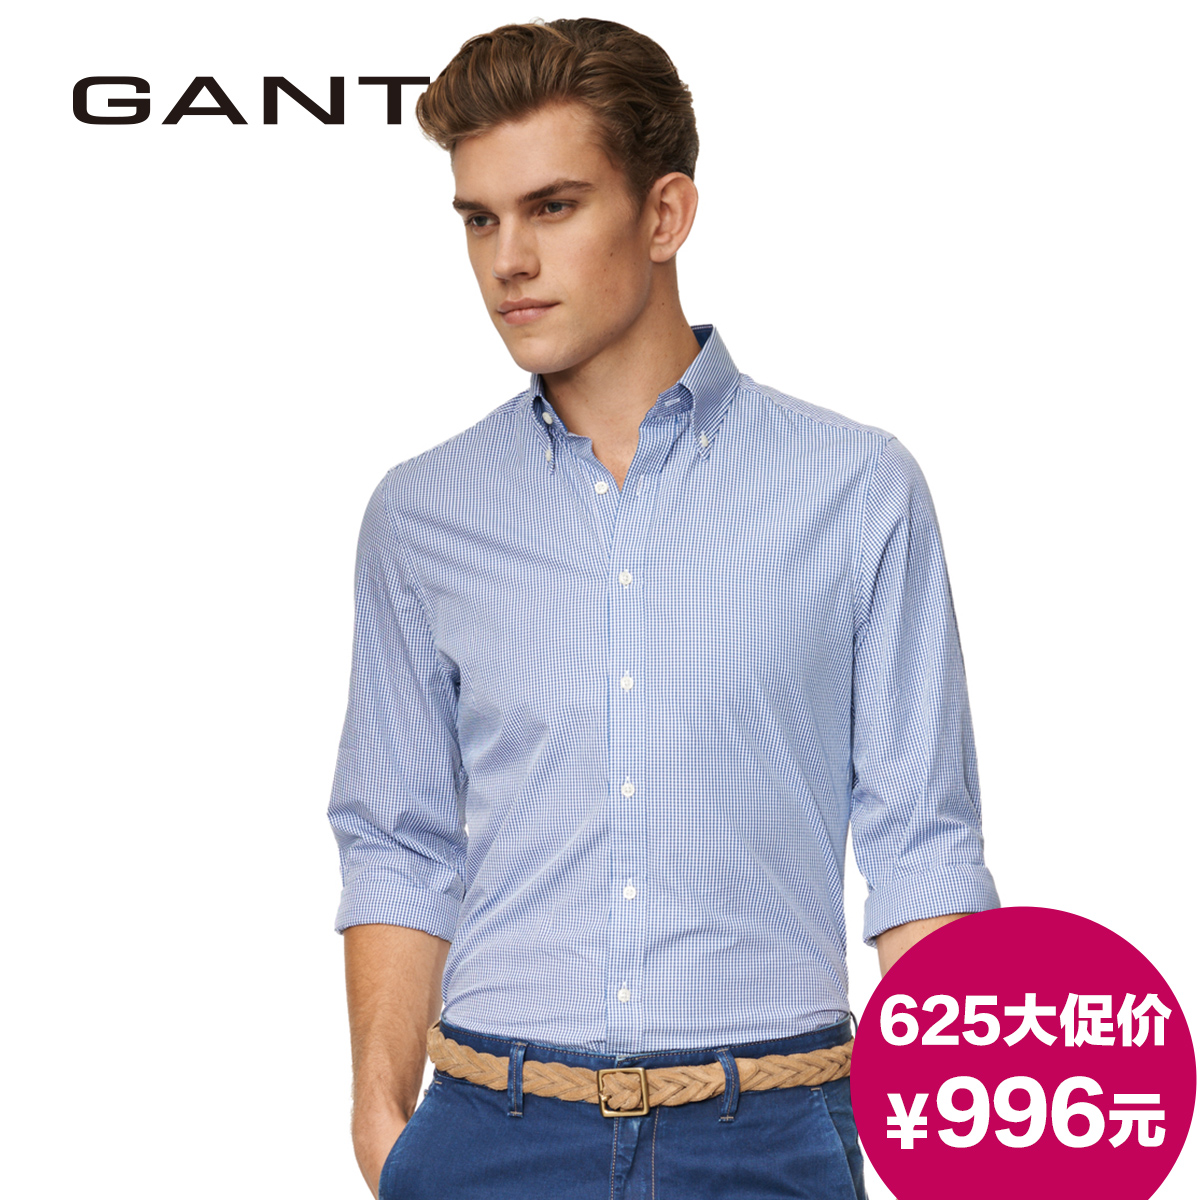 Рубашка Gant/Gantt